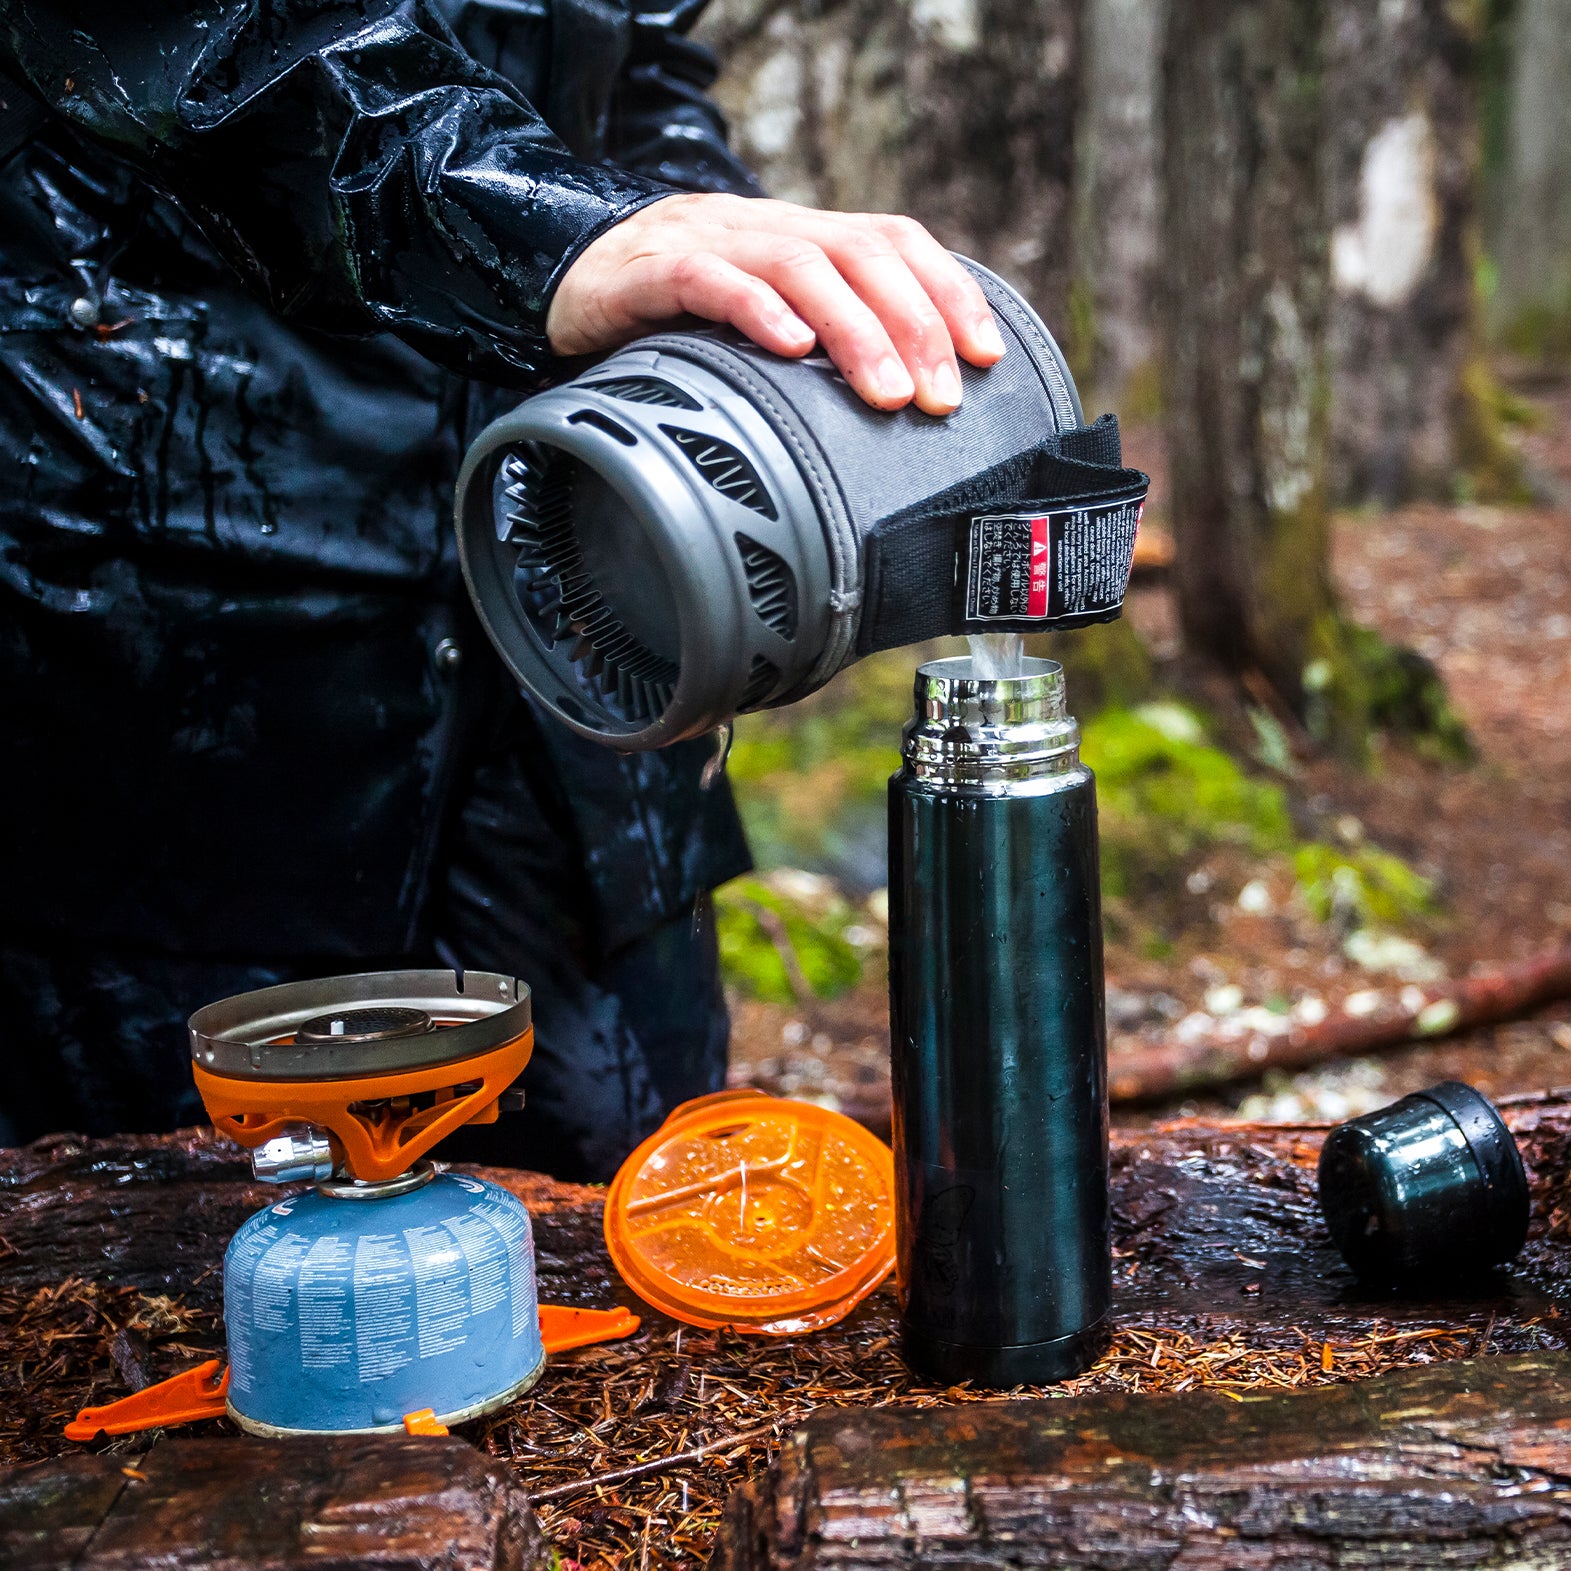 Hydro Flask Trail Bottle - Black Sheep Adventure Sports